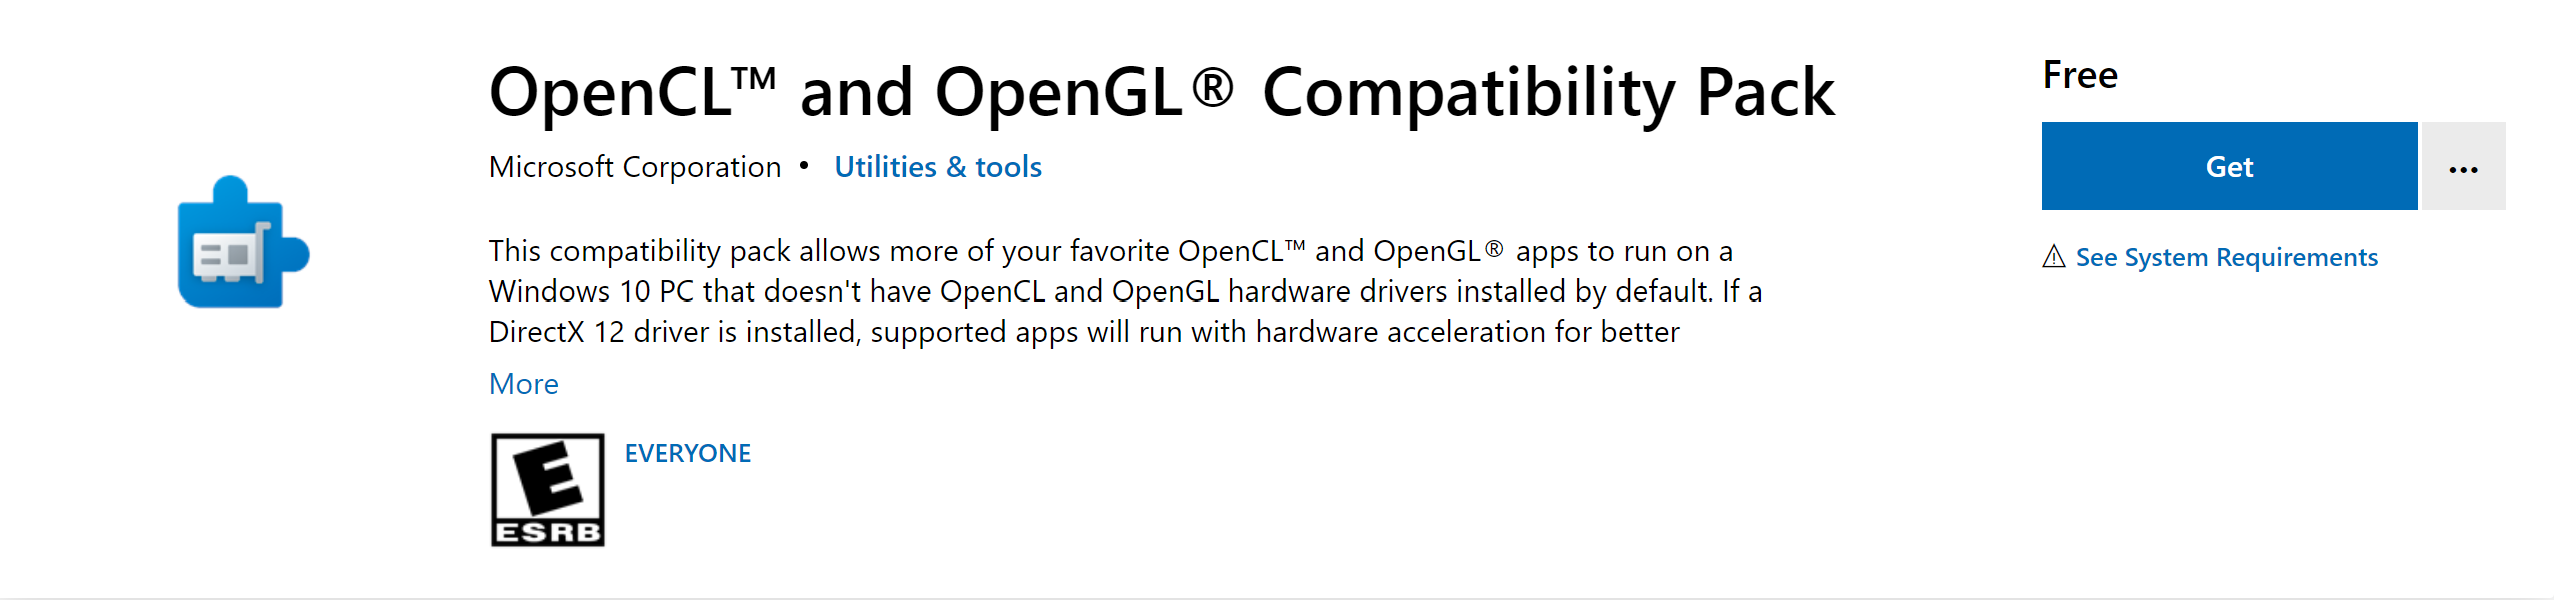 opencl benchmark tool windows